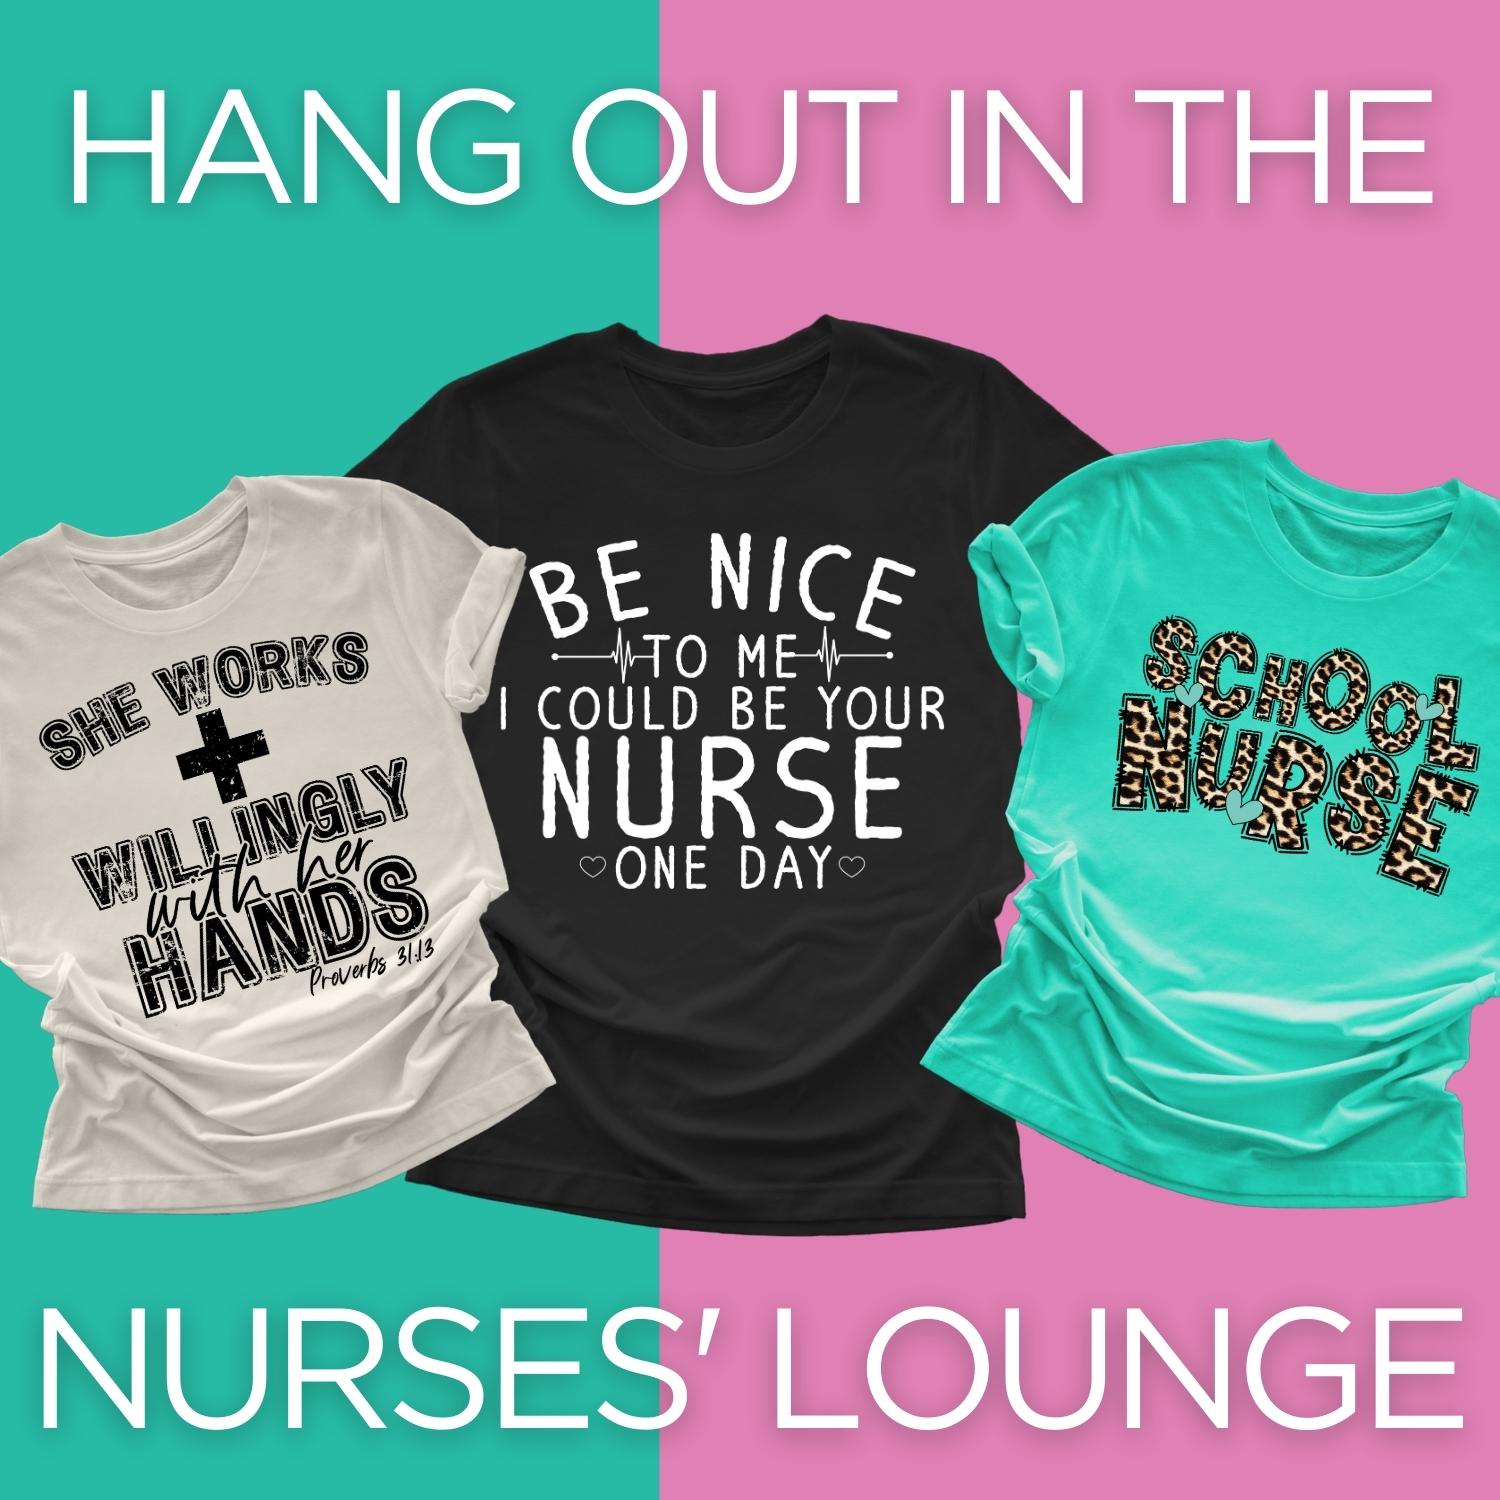 The Nurses' Lounge